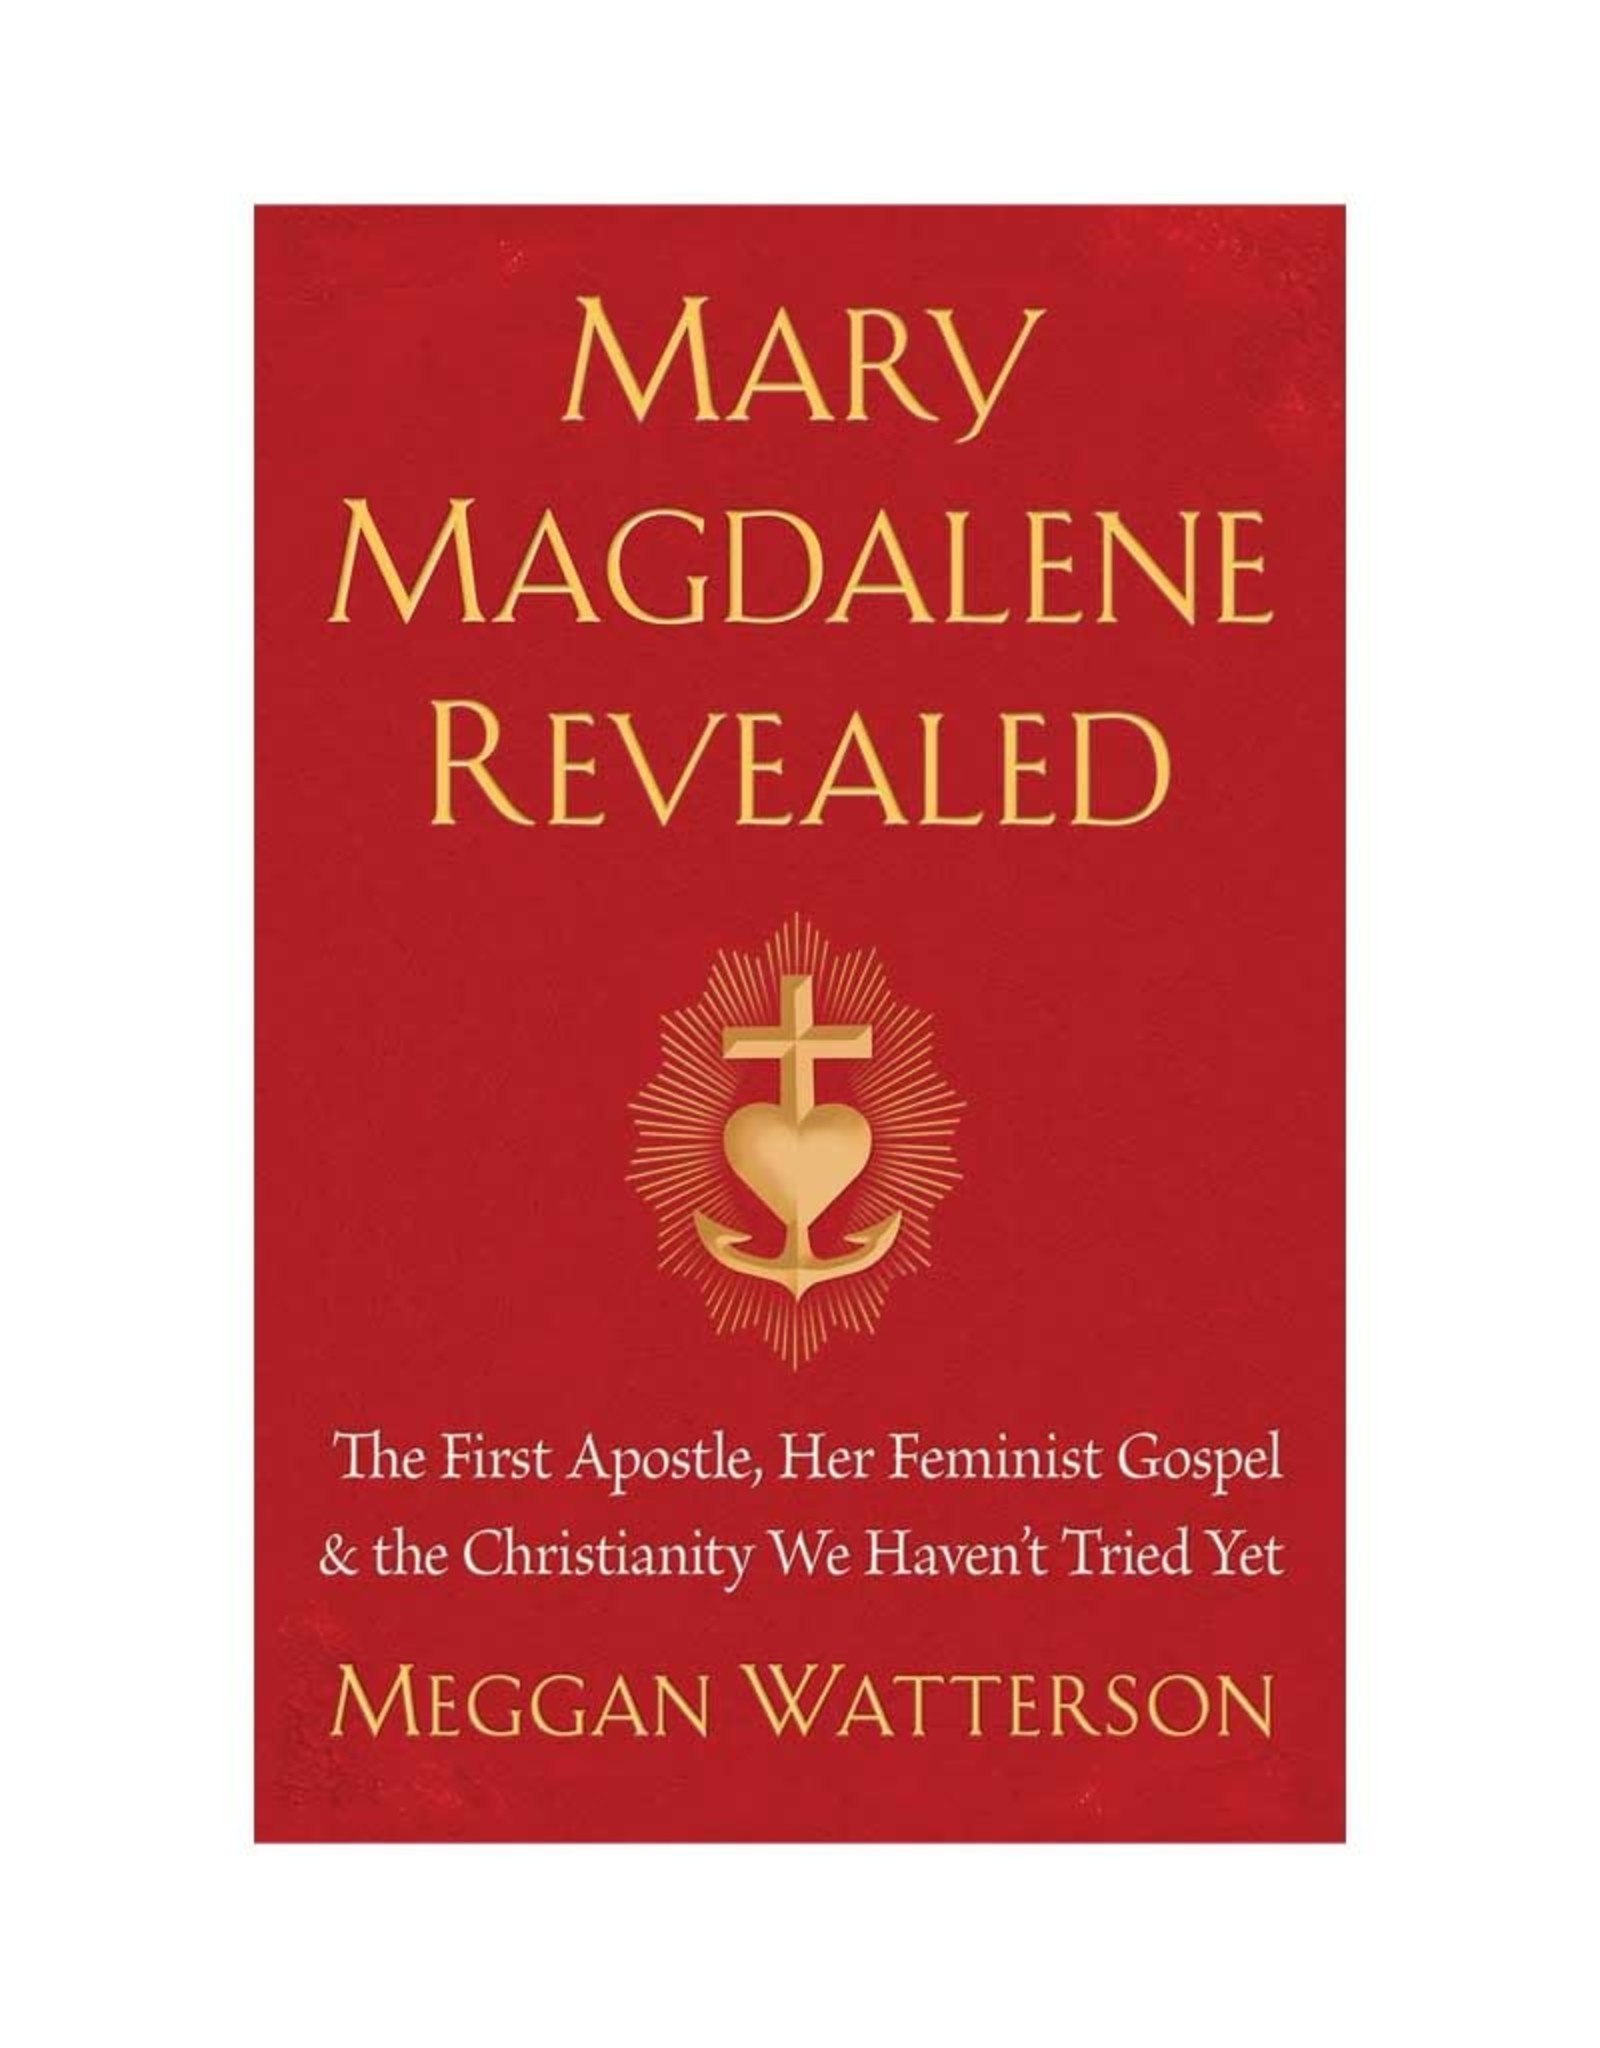 Mary Magdalene Revealed by Meggan Watterson